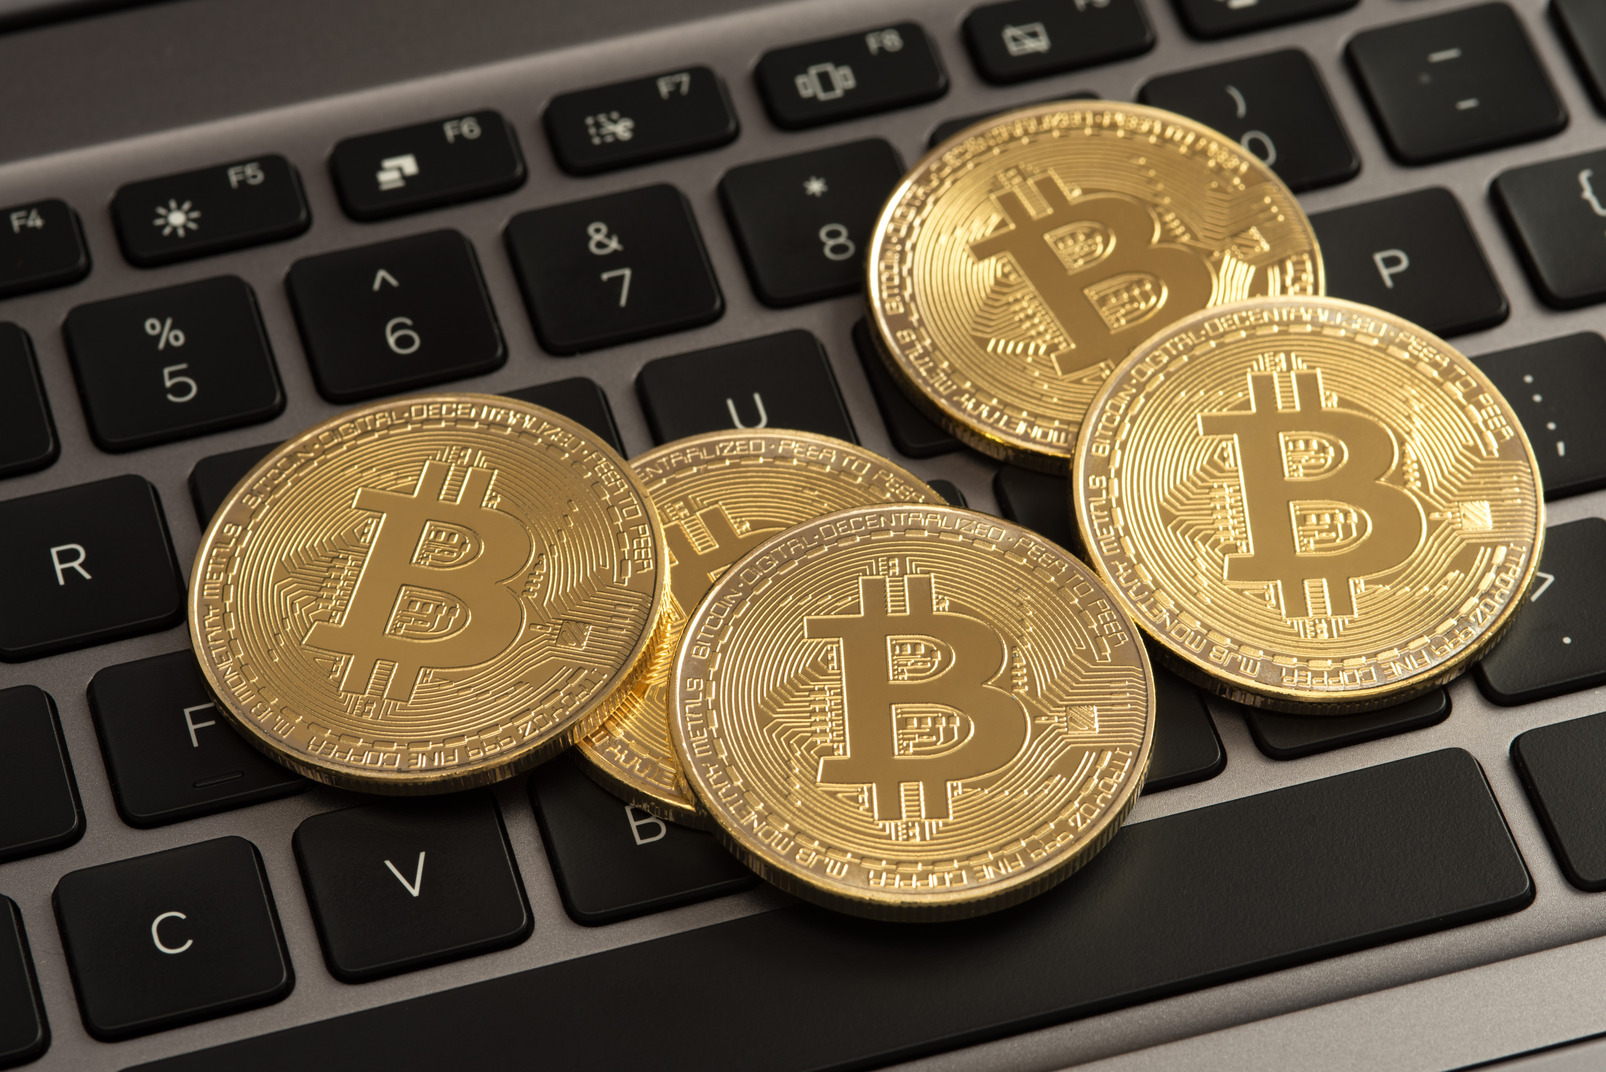 Bitcoins on laptop keyboard